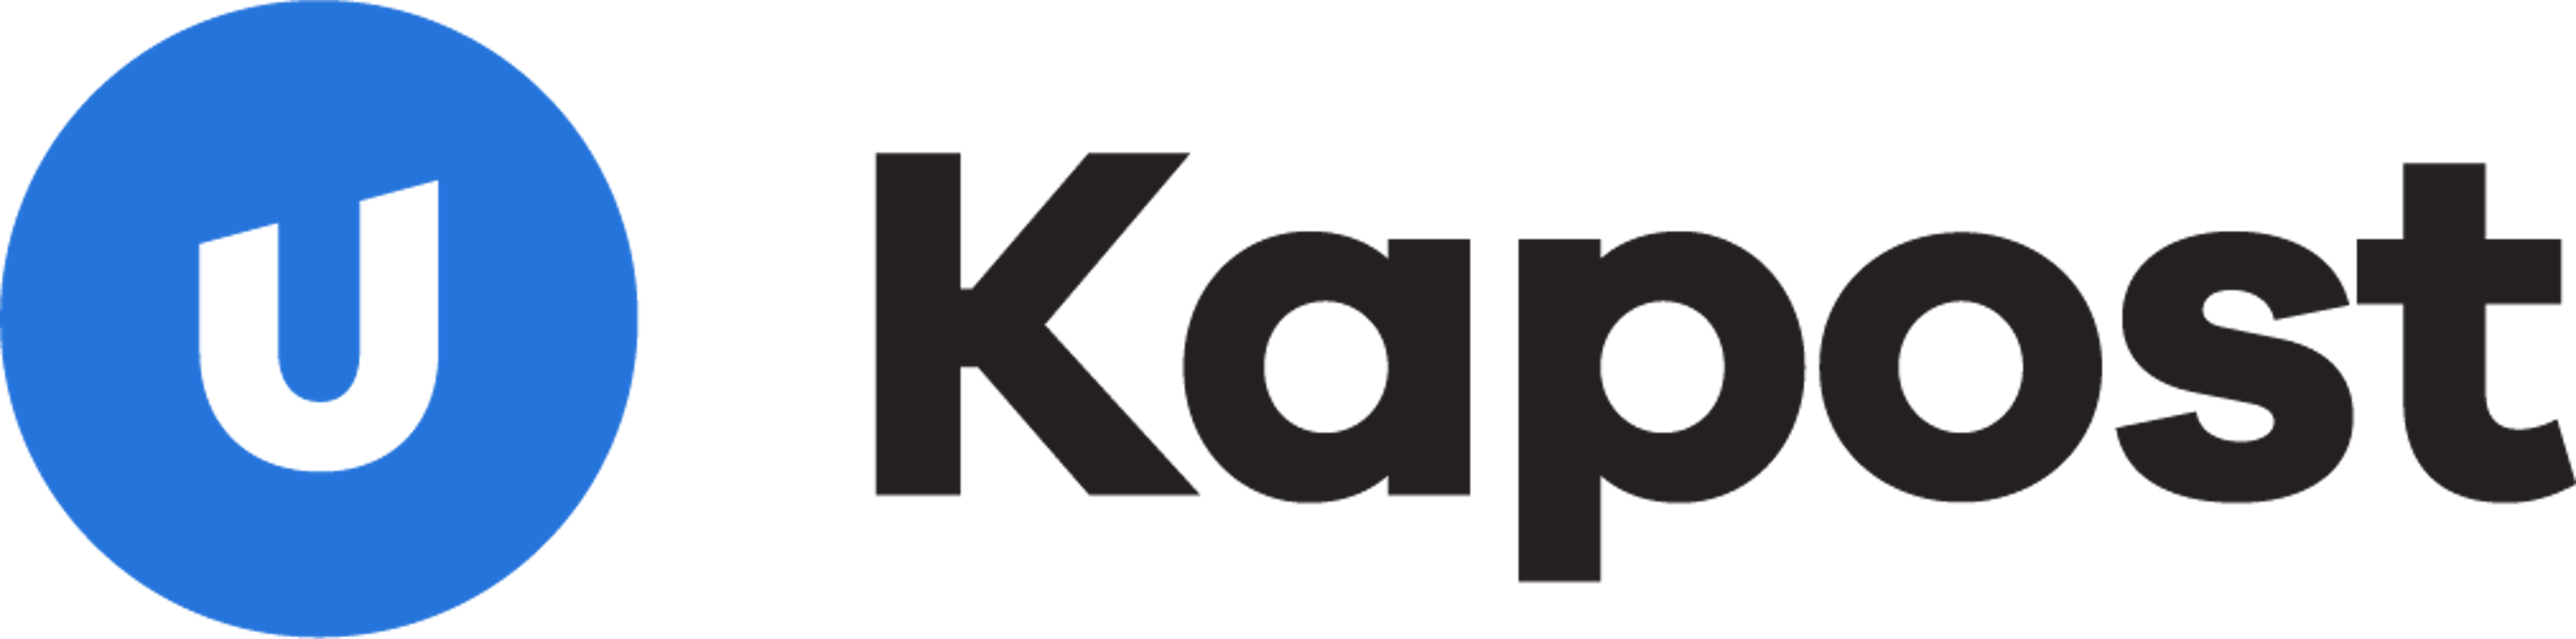 Kapost Logo